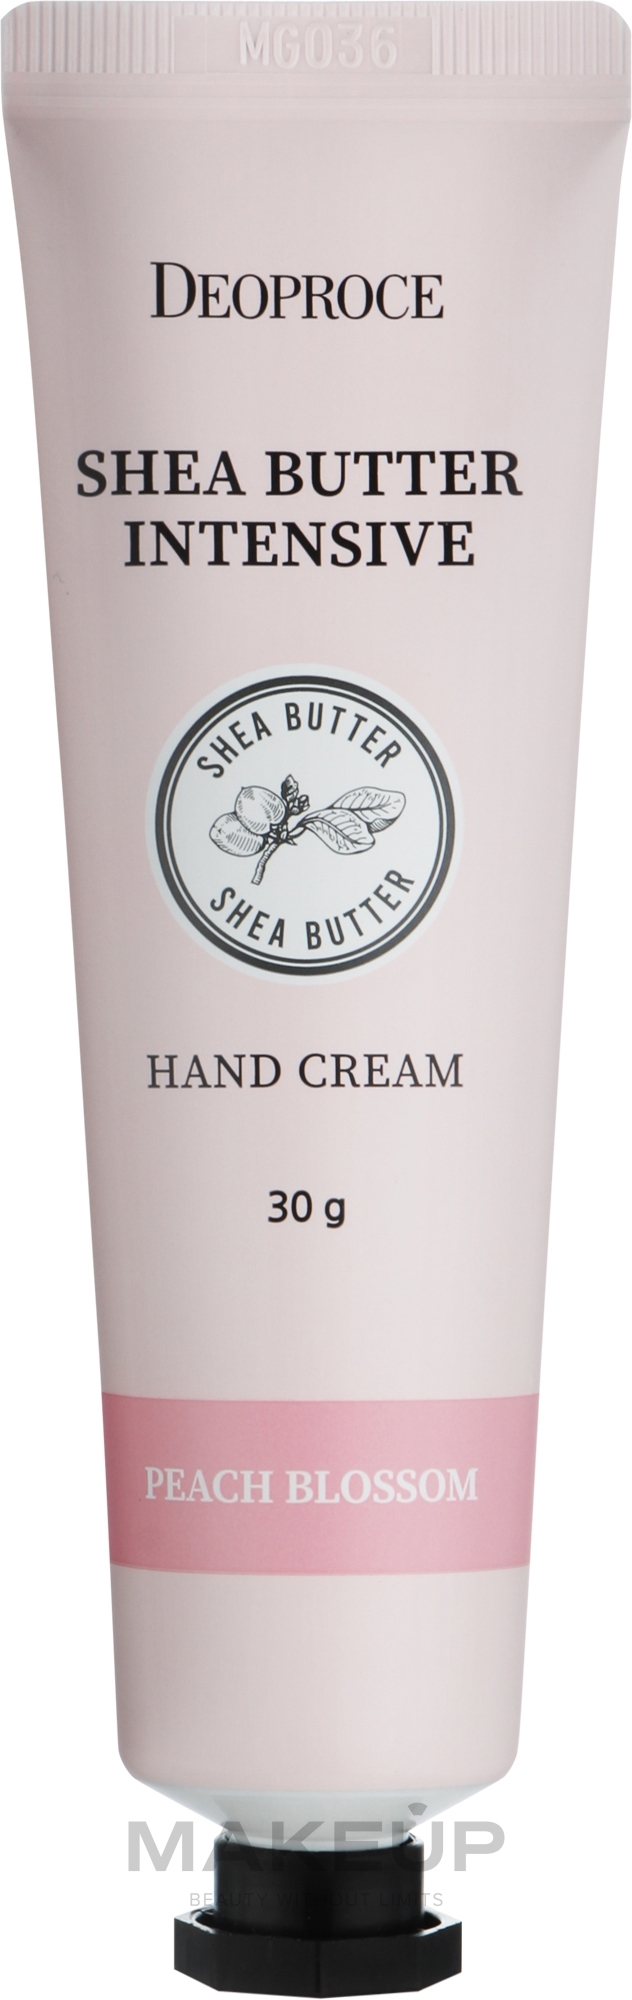 Крем для рук с ароматом цветущего персика - Deoproce Shea Butter Intensive Hand Cream Peach Blossom — фото 30g